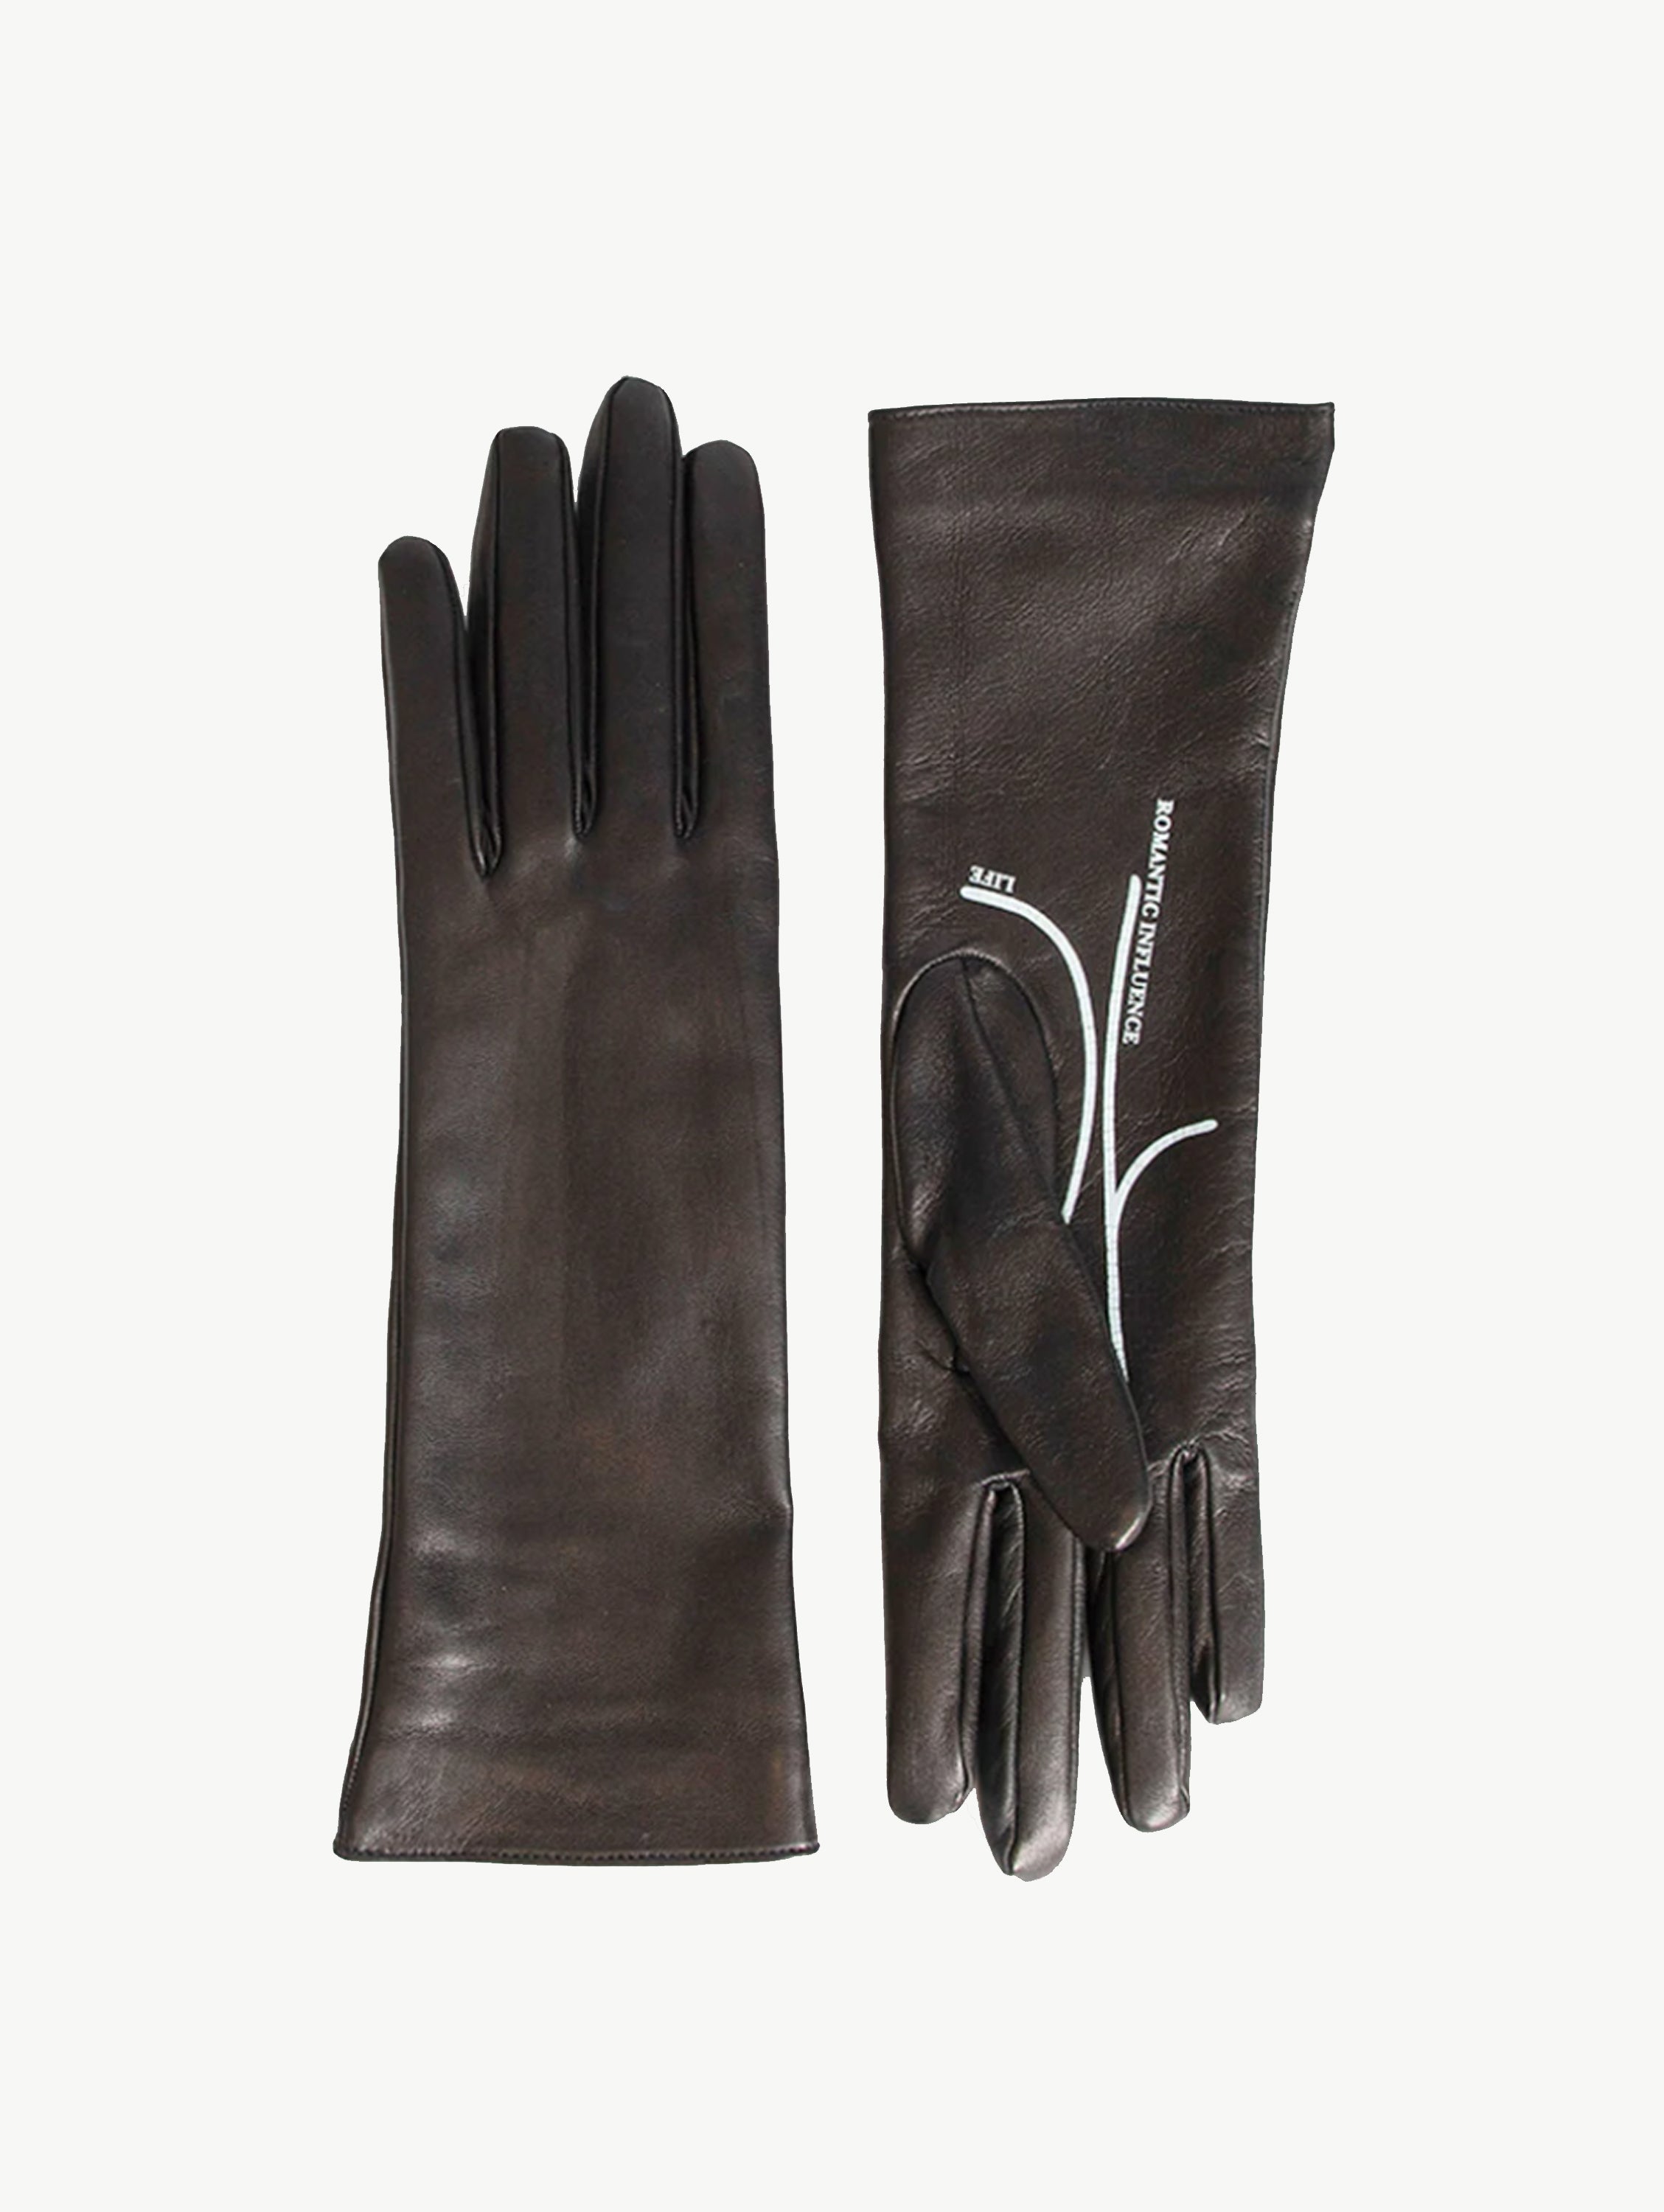 Black kleris gloves